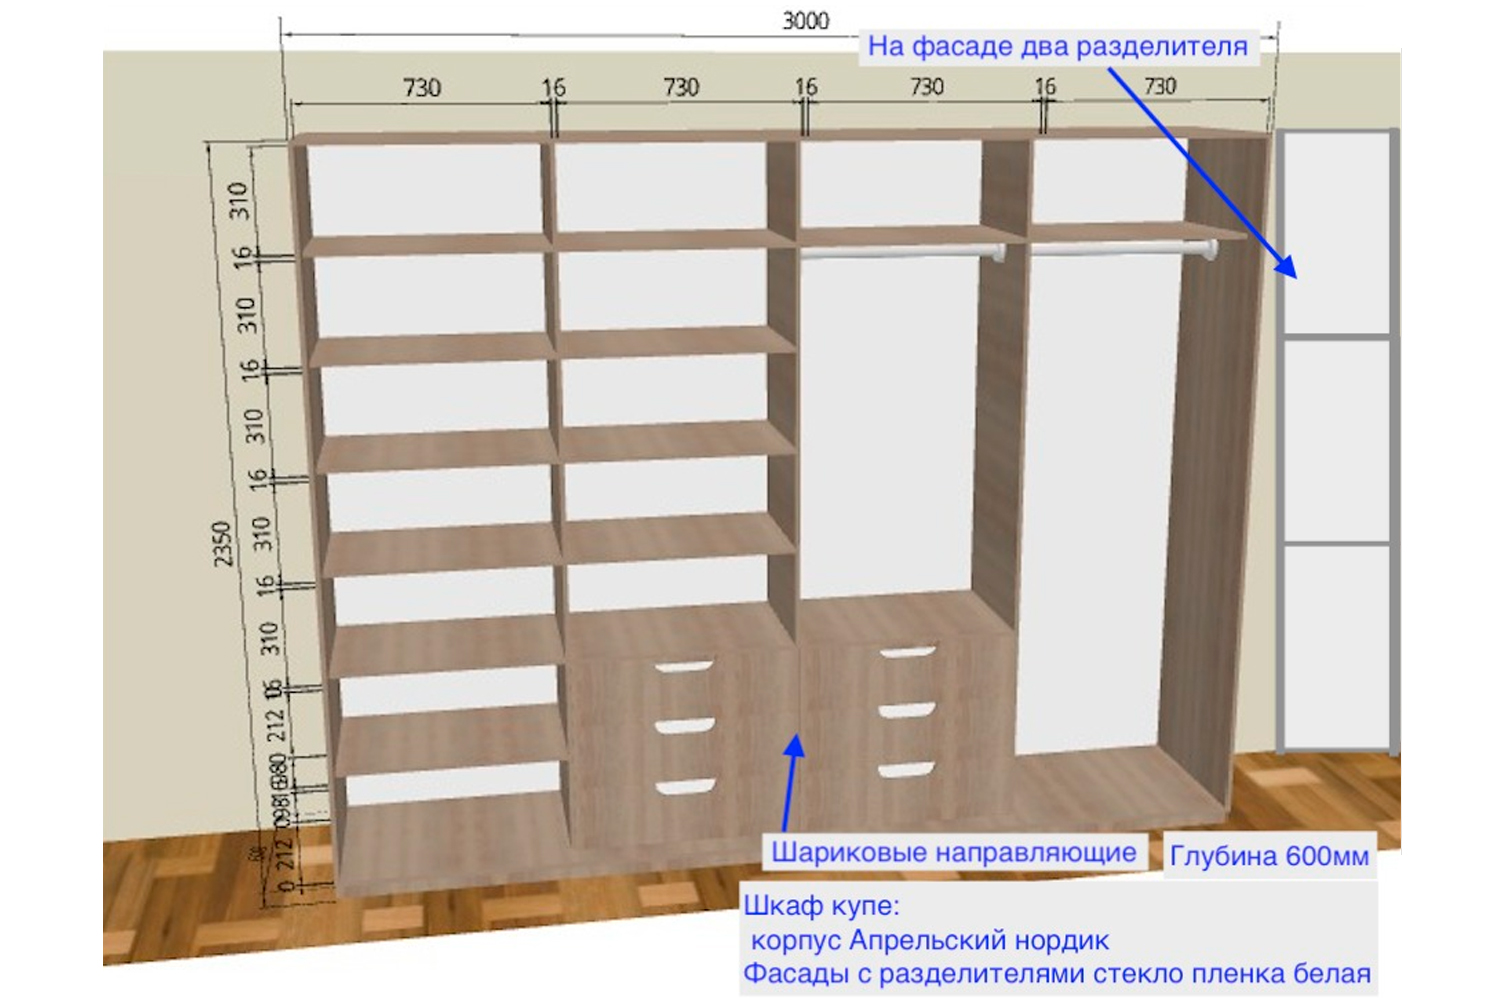 Проект шкафа-купе во всю стену на Российский пр. д 1